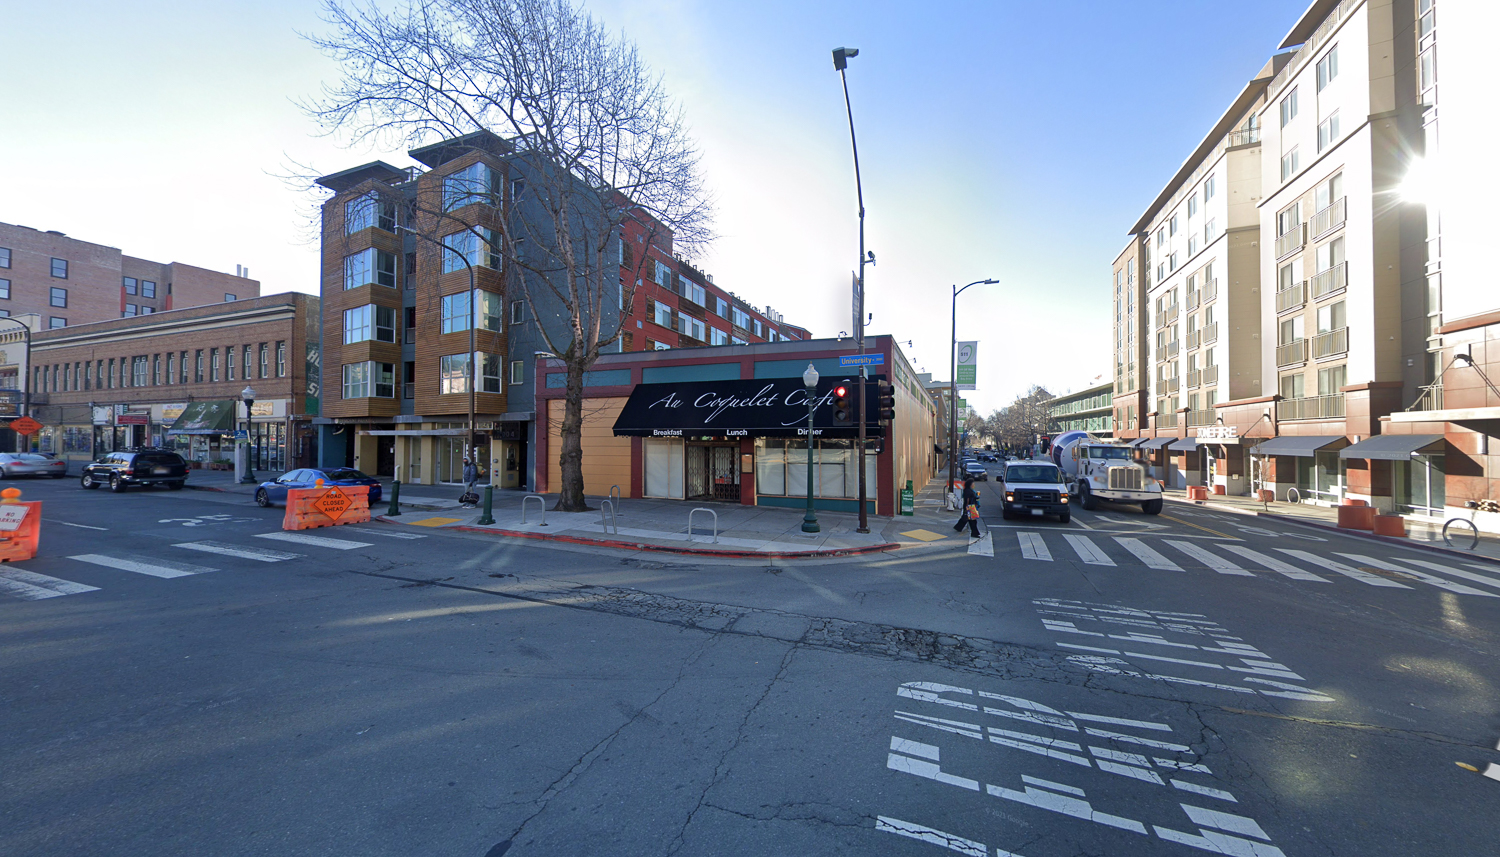 2000 University Avenue existing condition, image via Google Street View